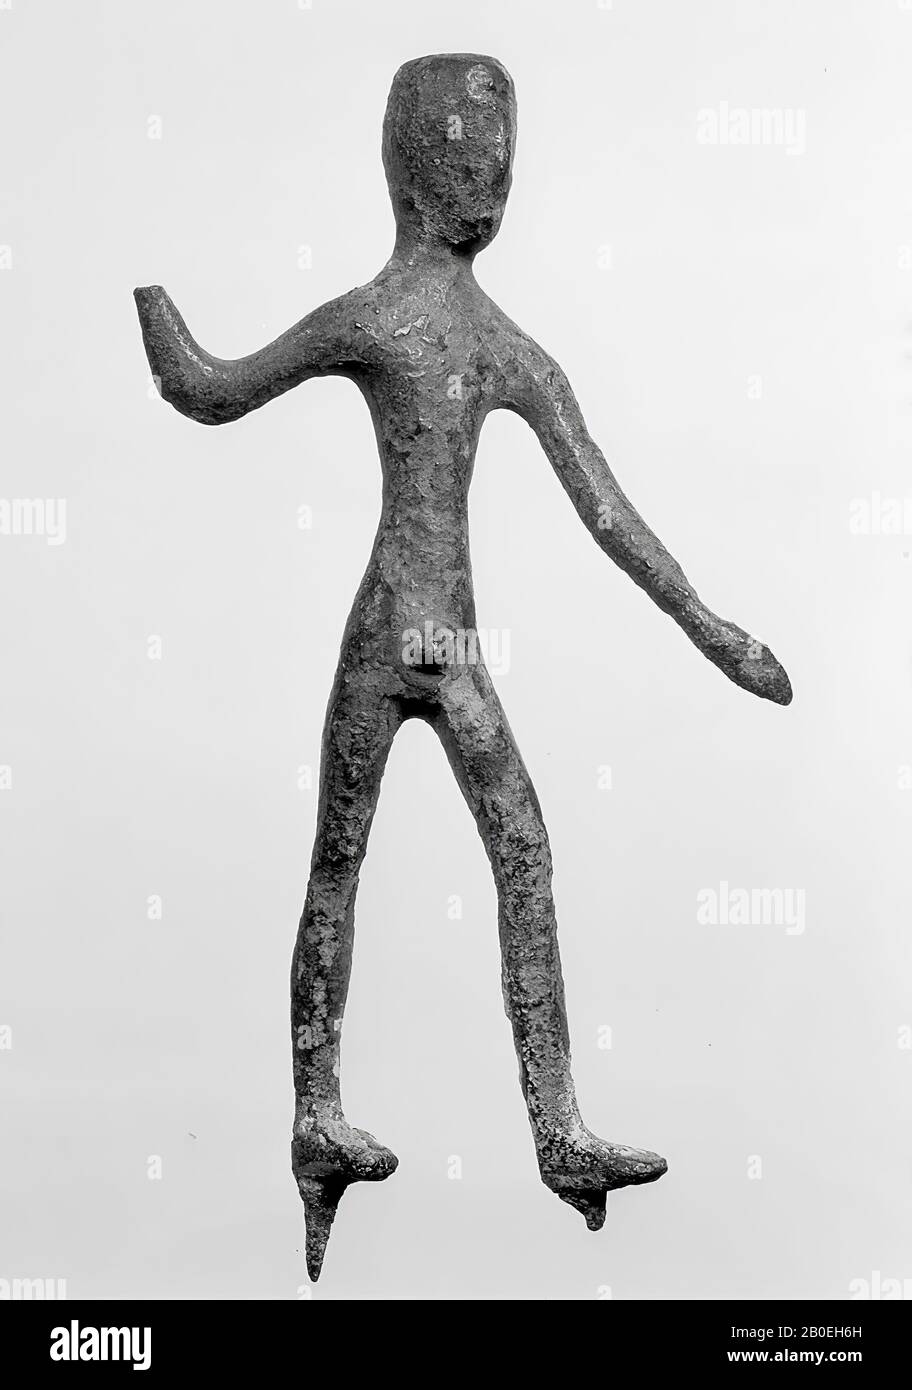 Classical antiquity, statuette, bronze, 9 x 4.5 x ca. 1 cm, Location, Italy Stock Photo